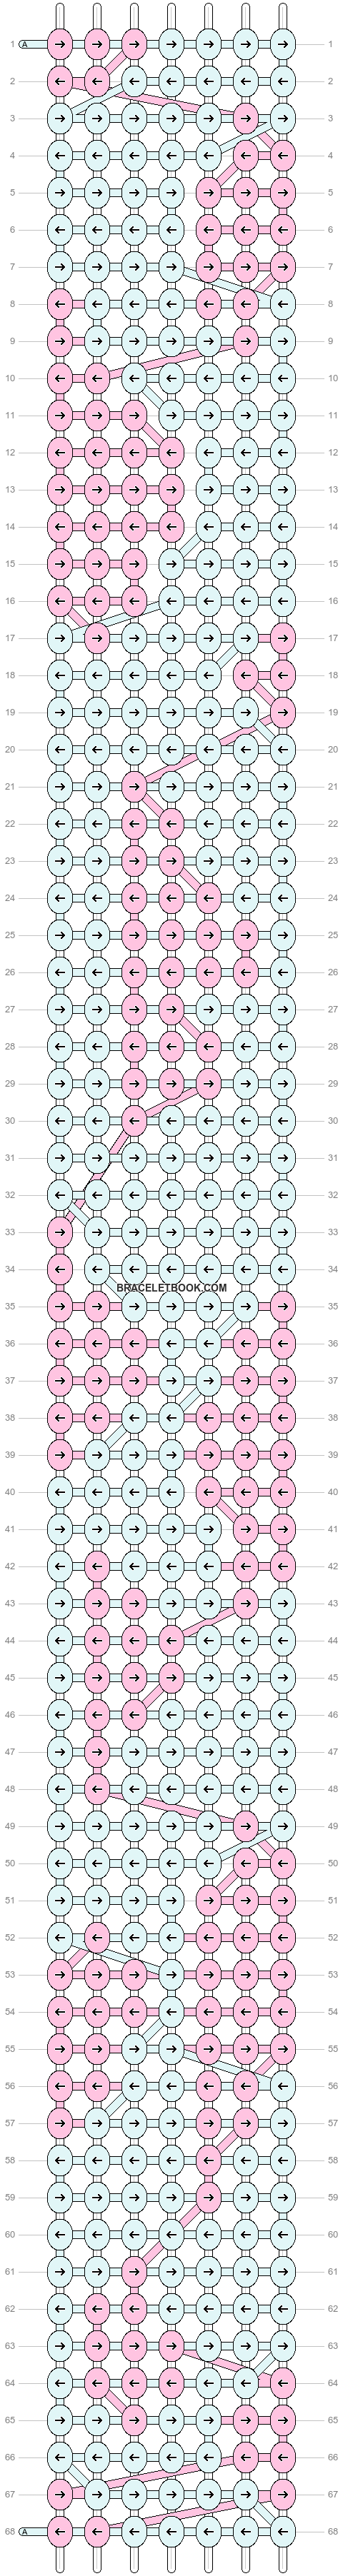 Alpha pattern #1654 variation #47277 pattern